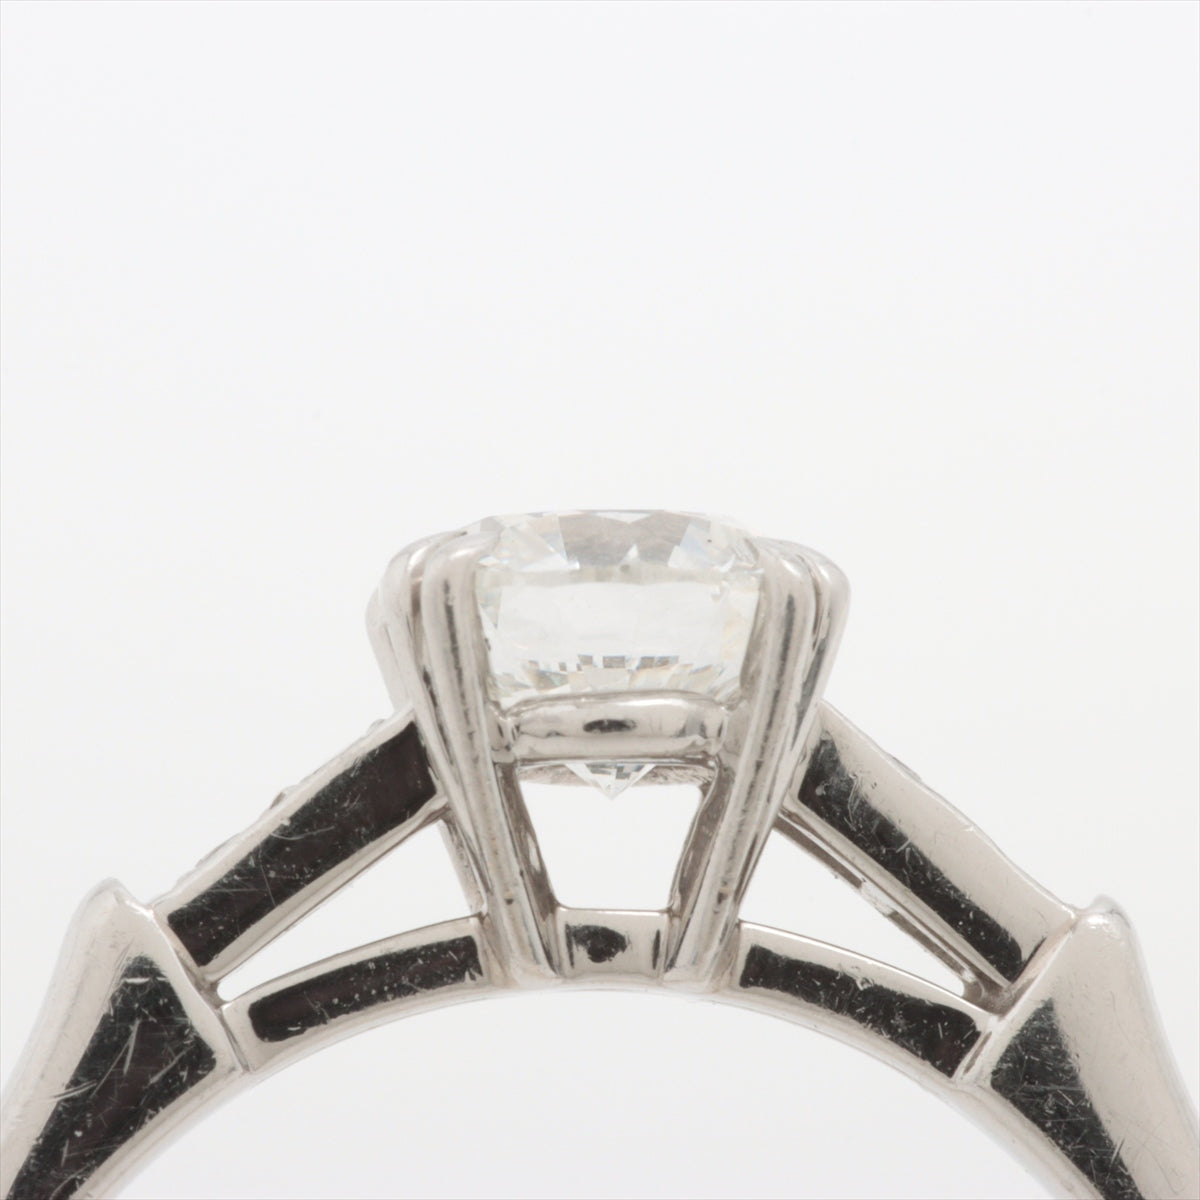 Harry Winston Trist Diamond Ring Pt950 3.5g 0.70 F VS1 VG NONE GIA 2005